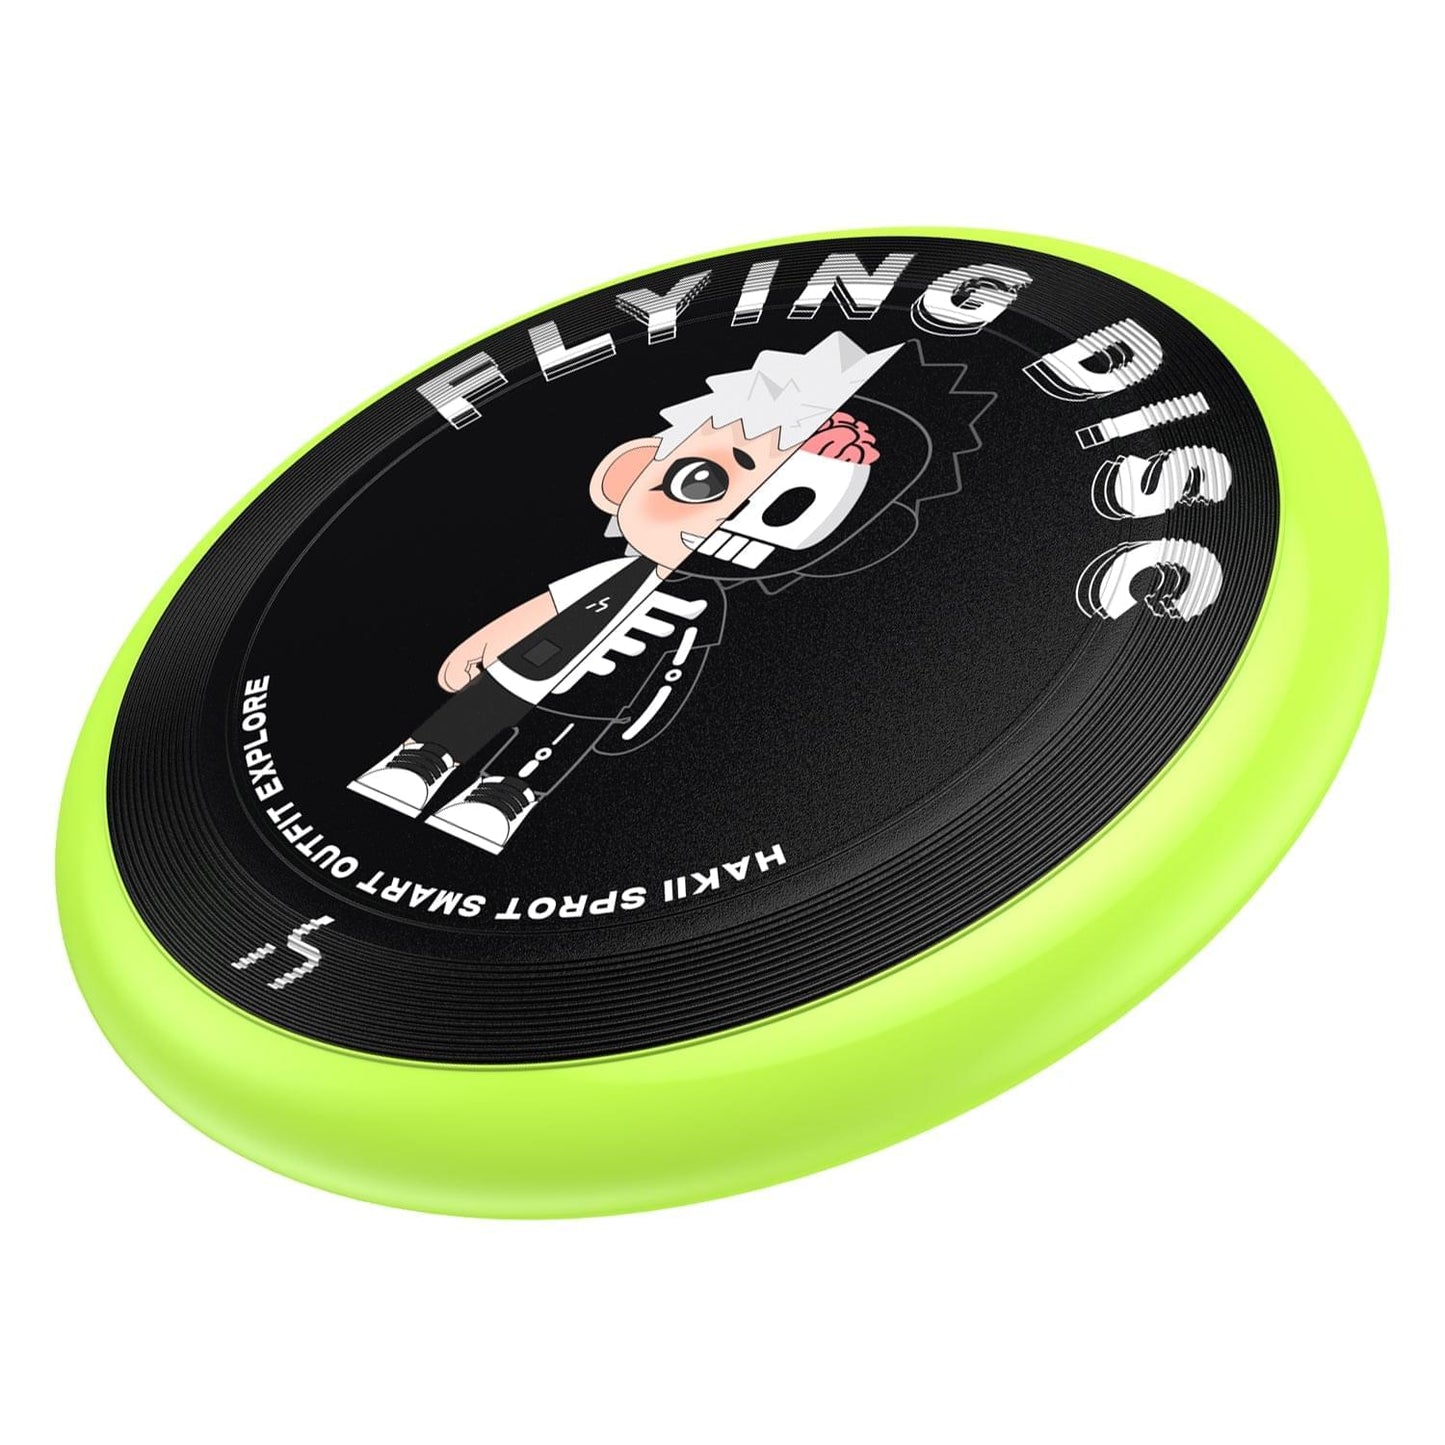 HAKII UFO Flying Disc